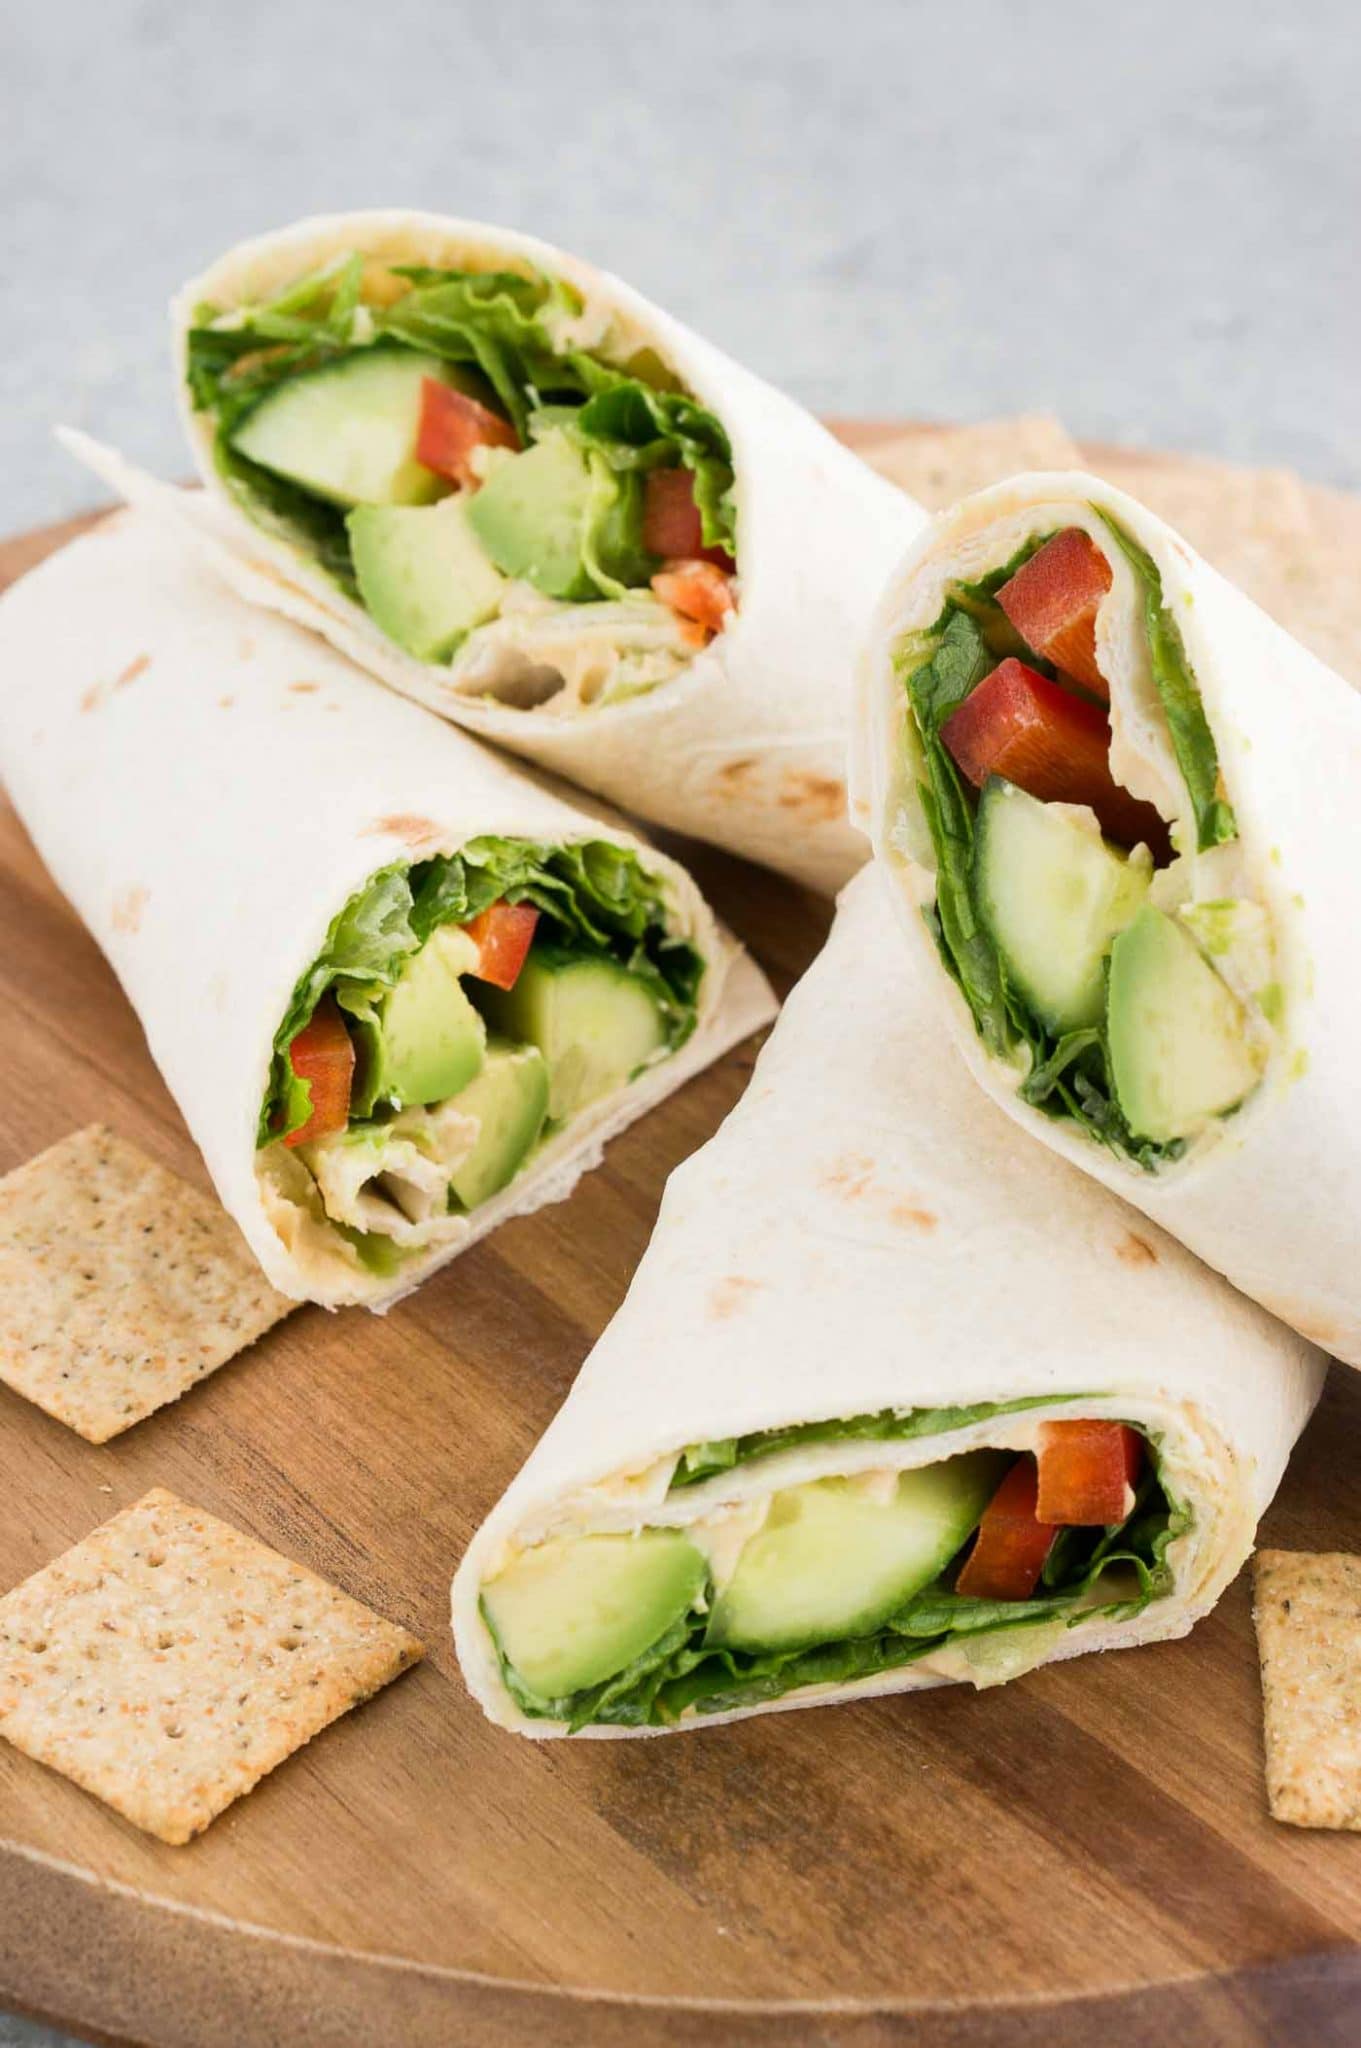 vegan wraps with veggies and hummus